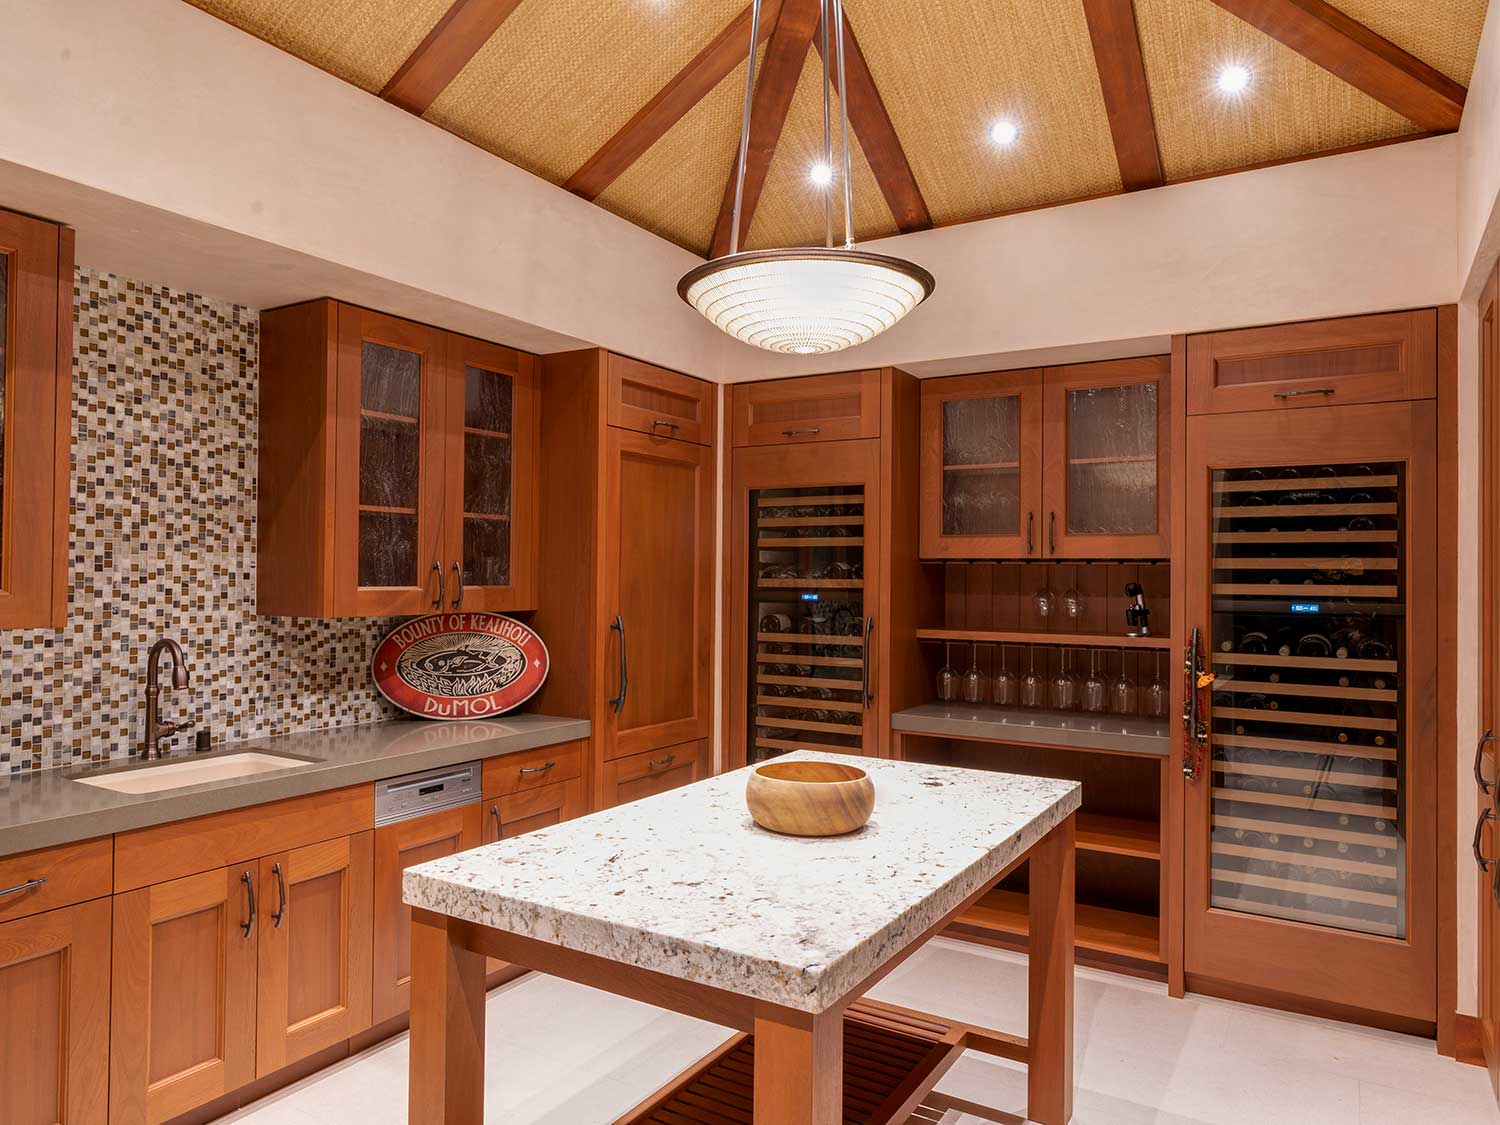 Kohanaiki kitchen with wine storage